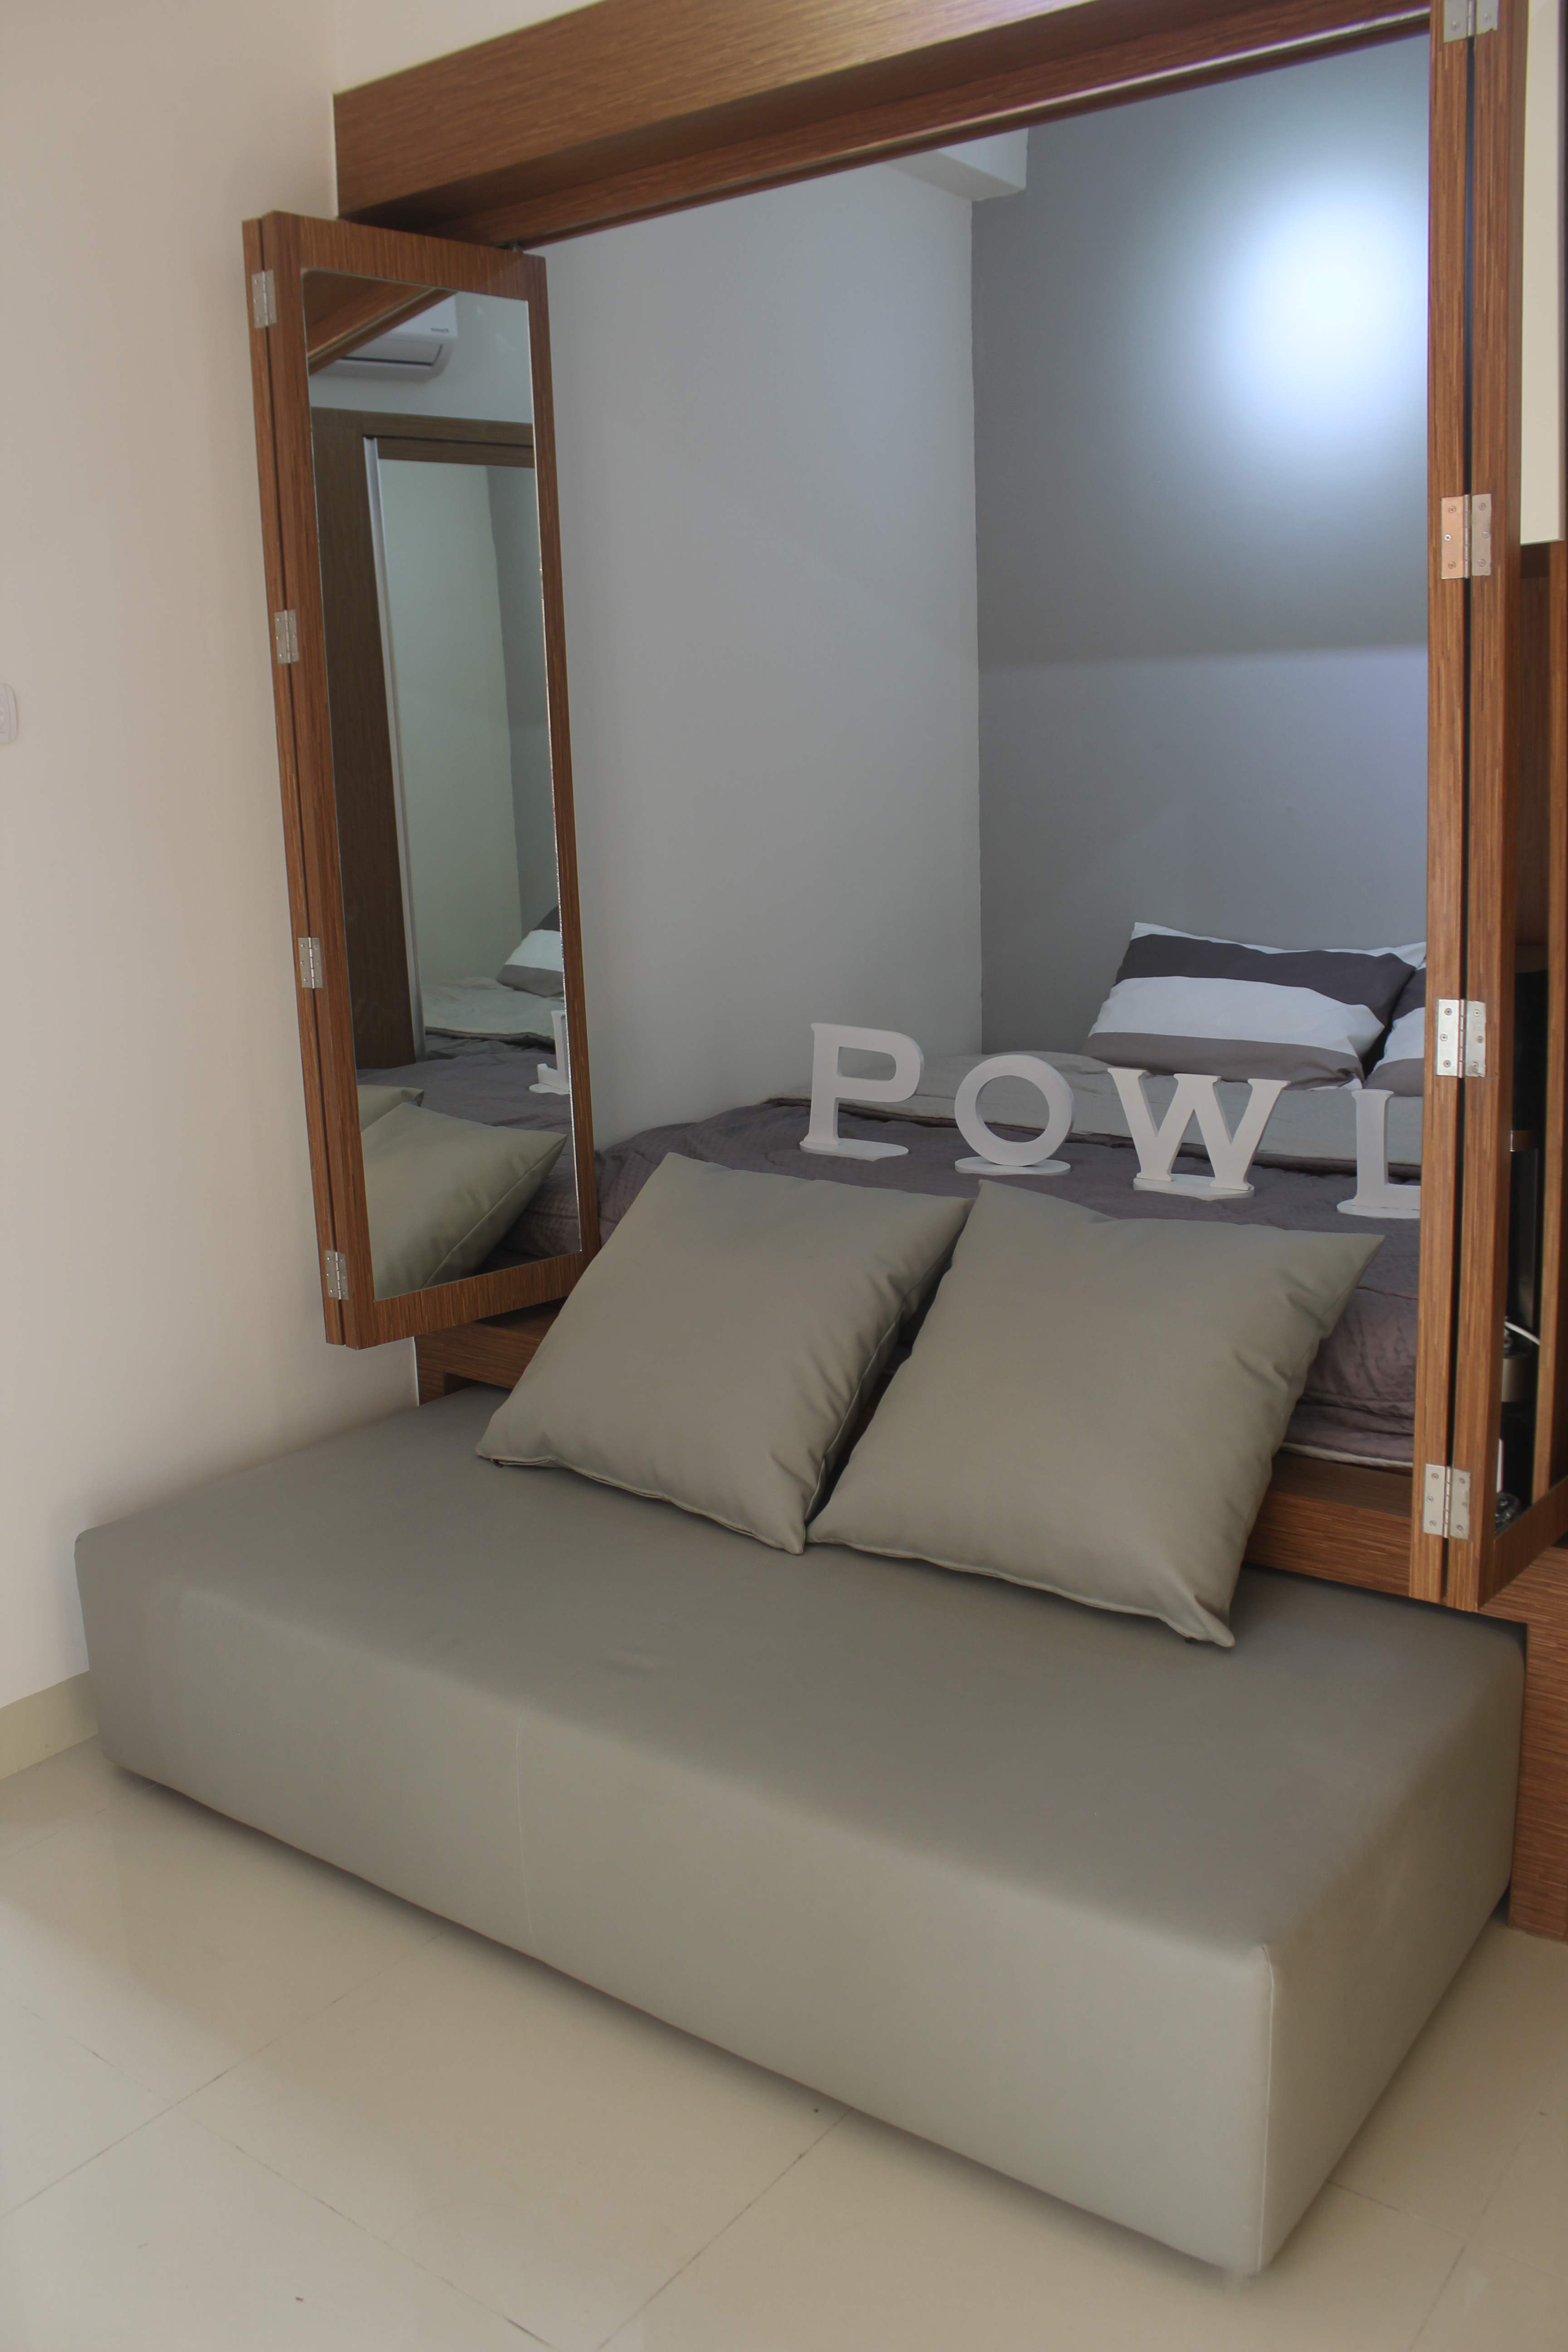 Desain Apartemen Tipe 36 Powl Studio Toko Furniture Interior